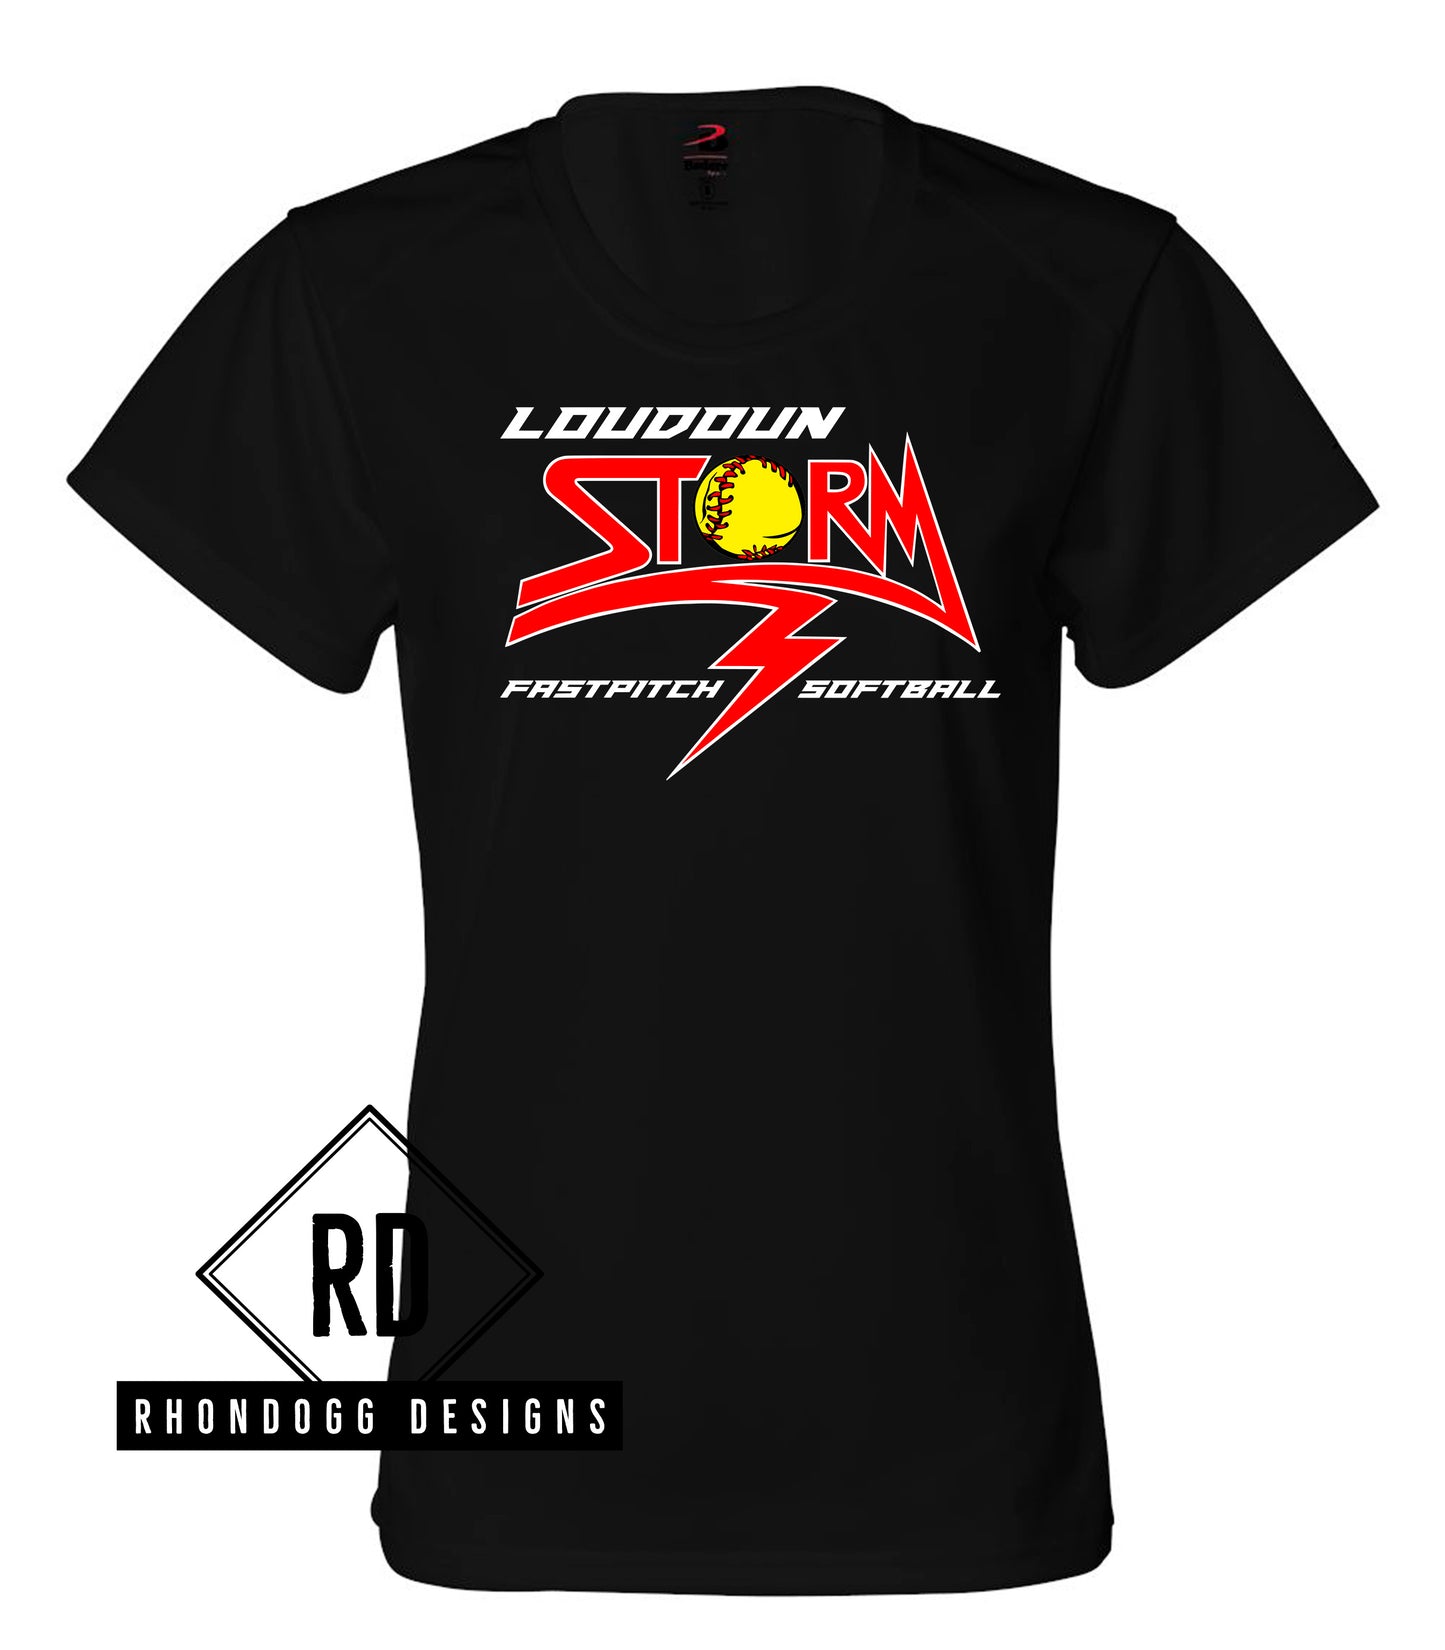 Loudoun Storm Women's Performance Shirt